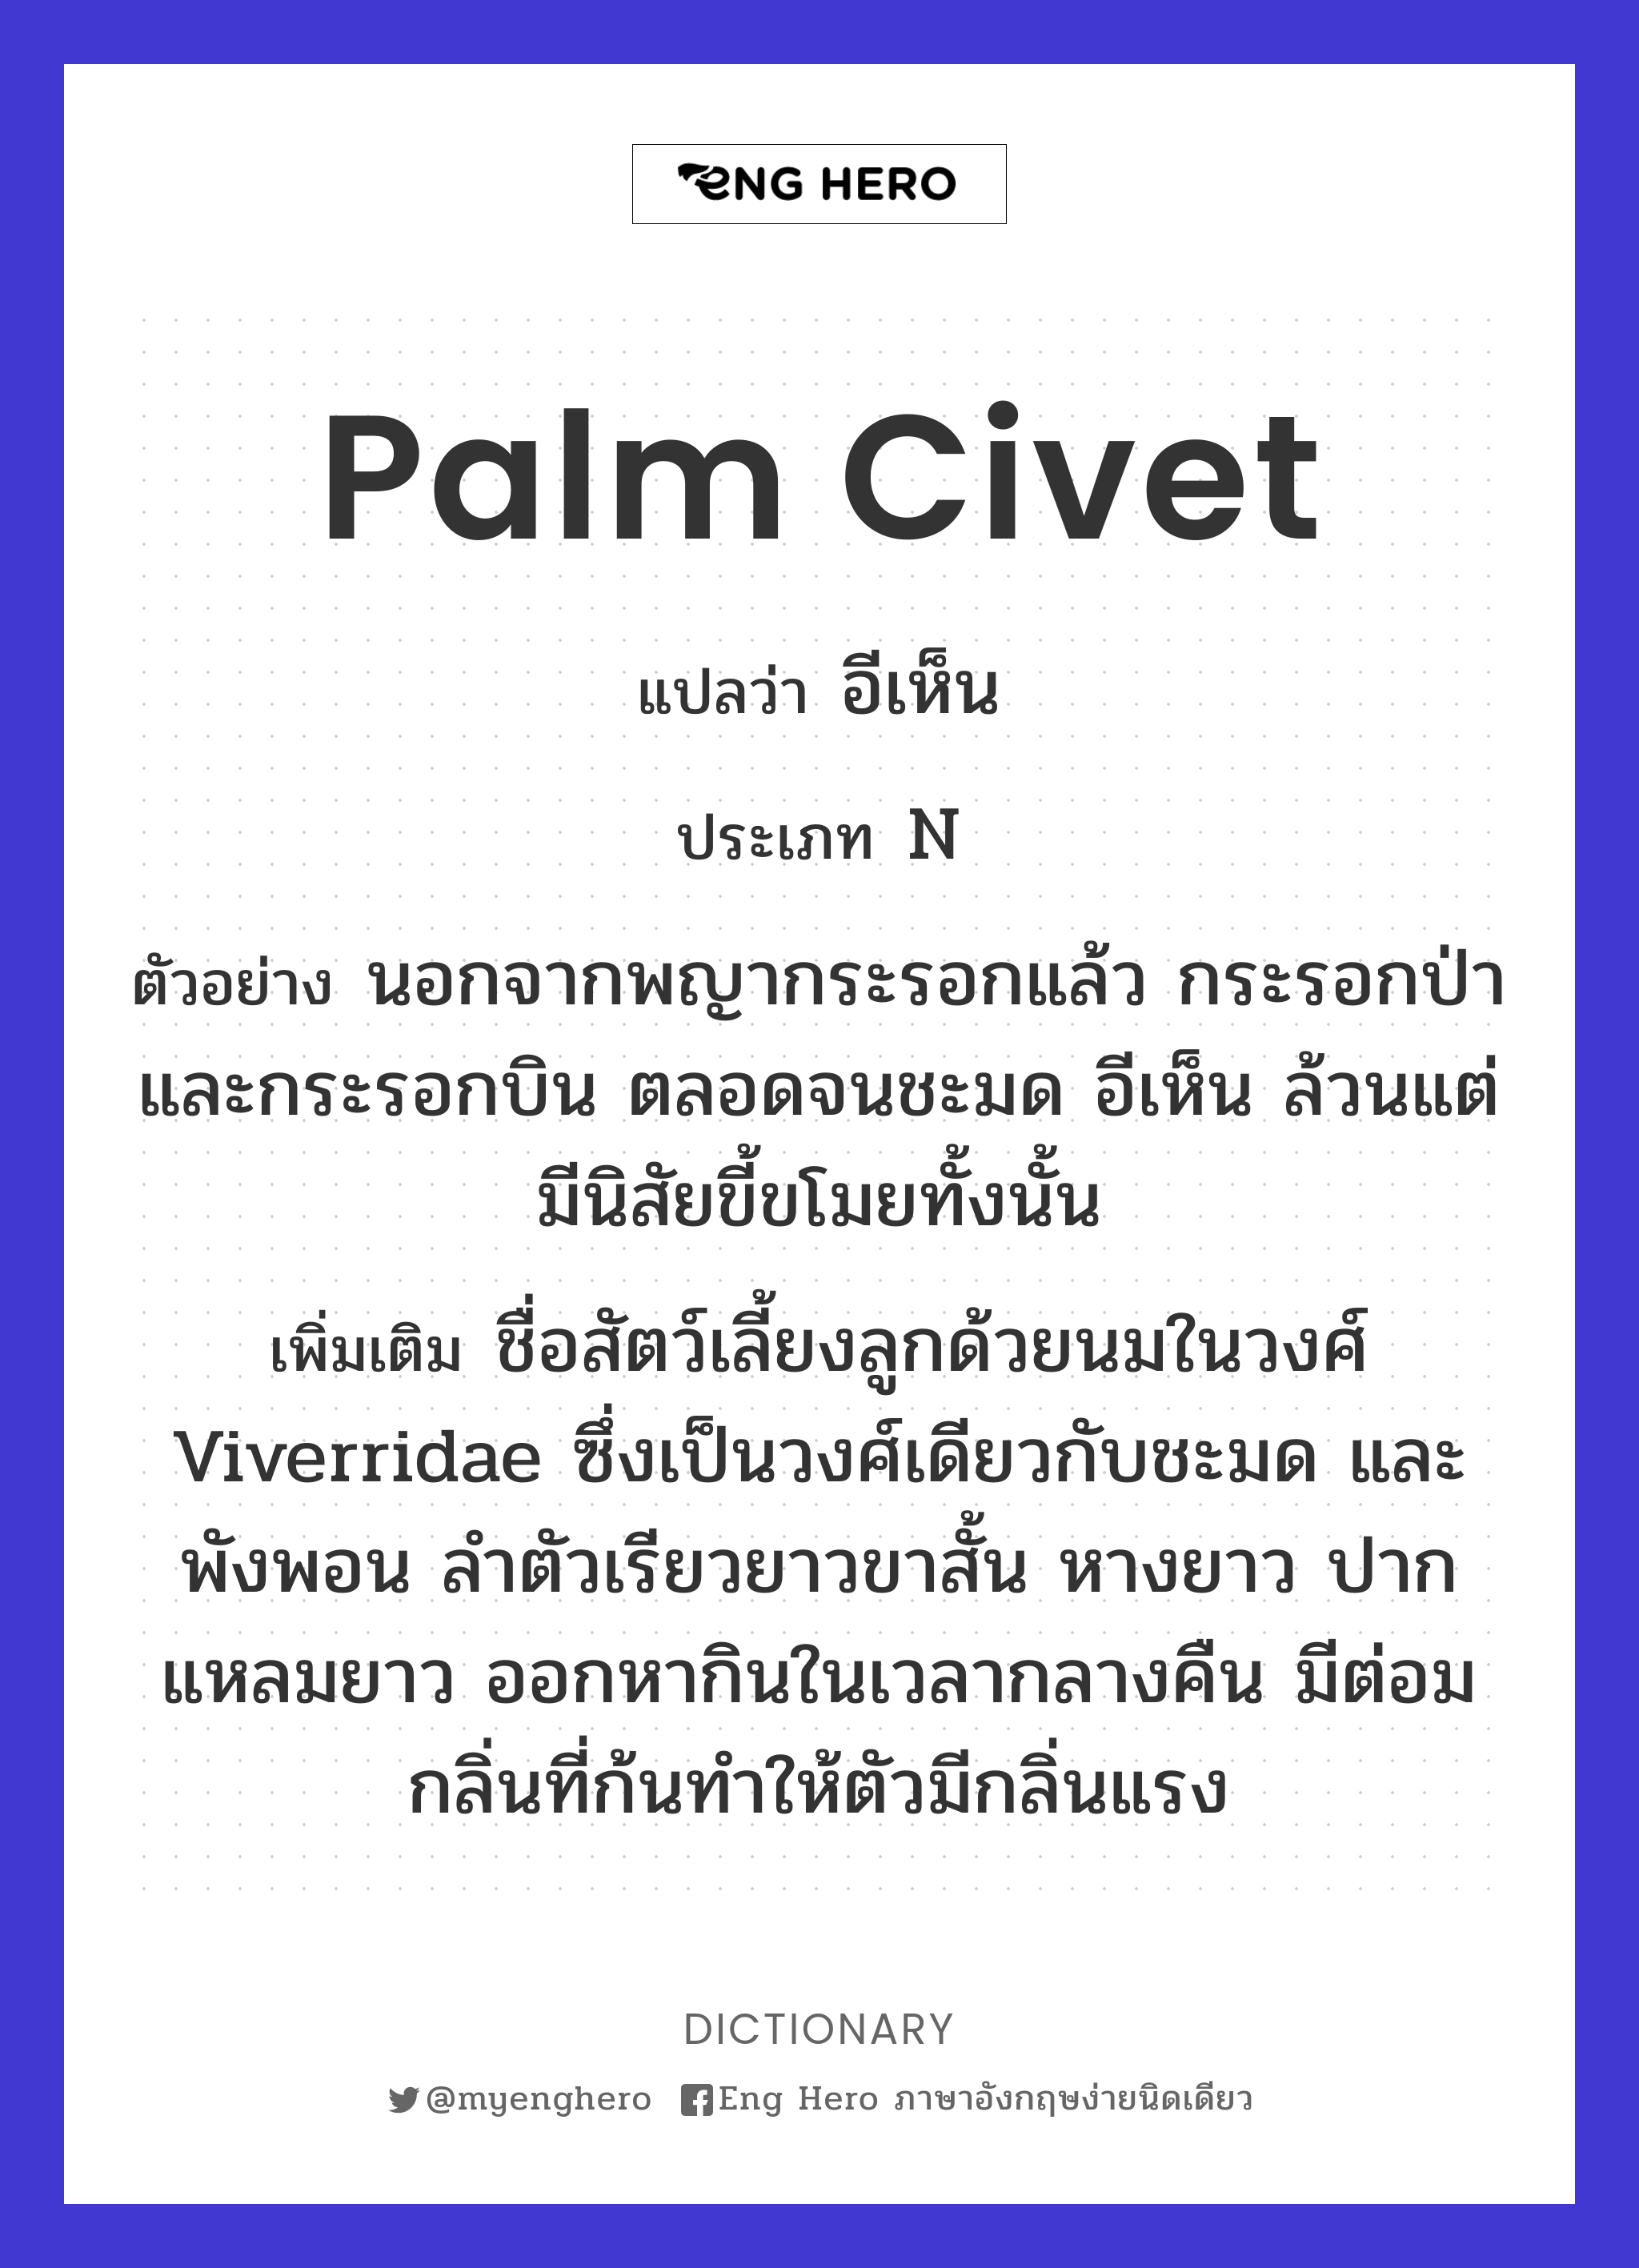 palm civet